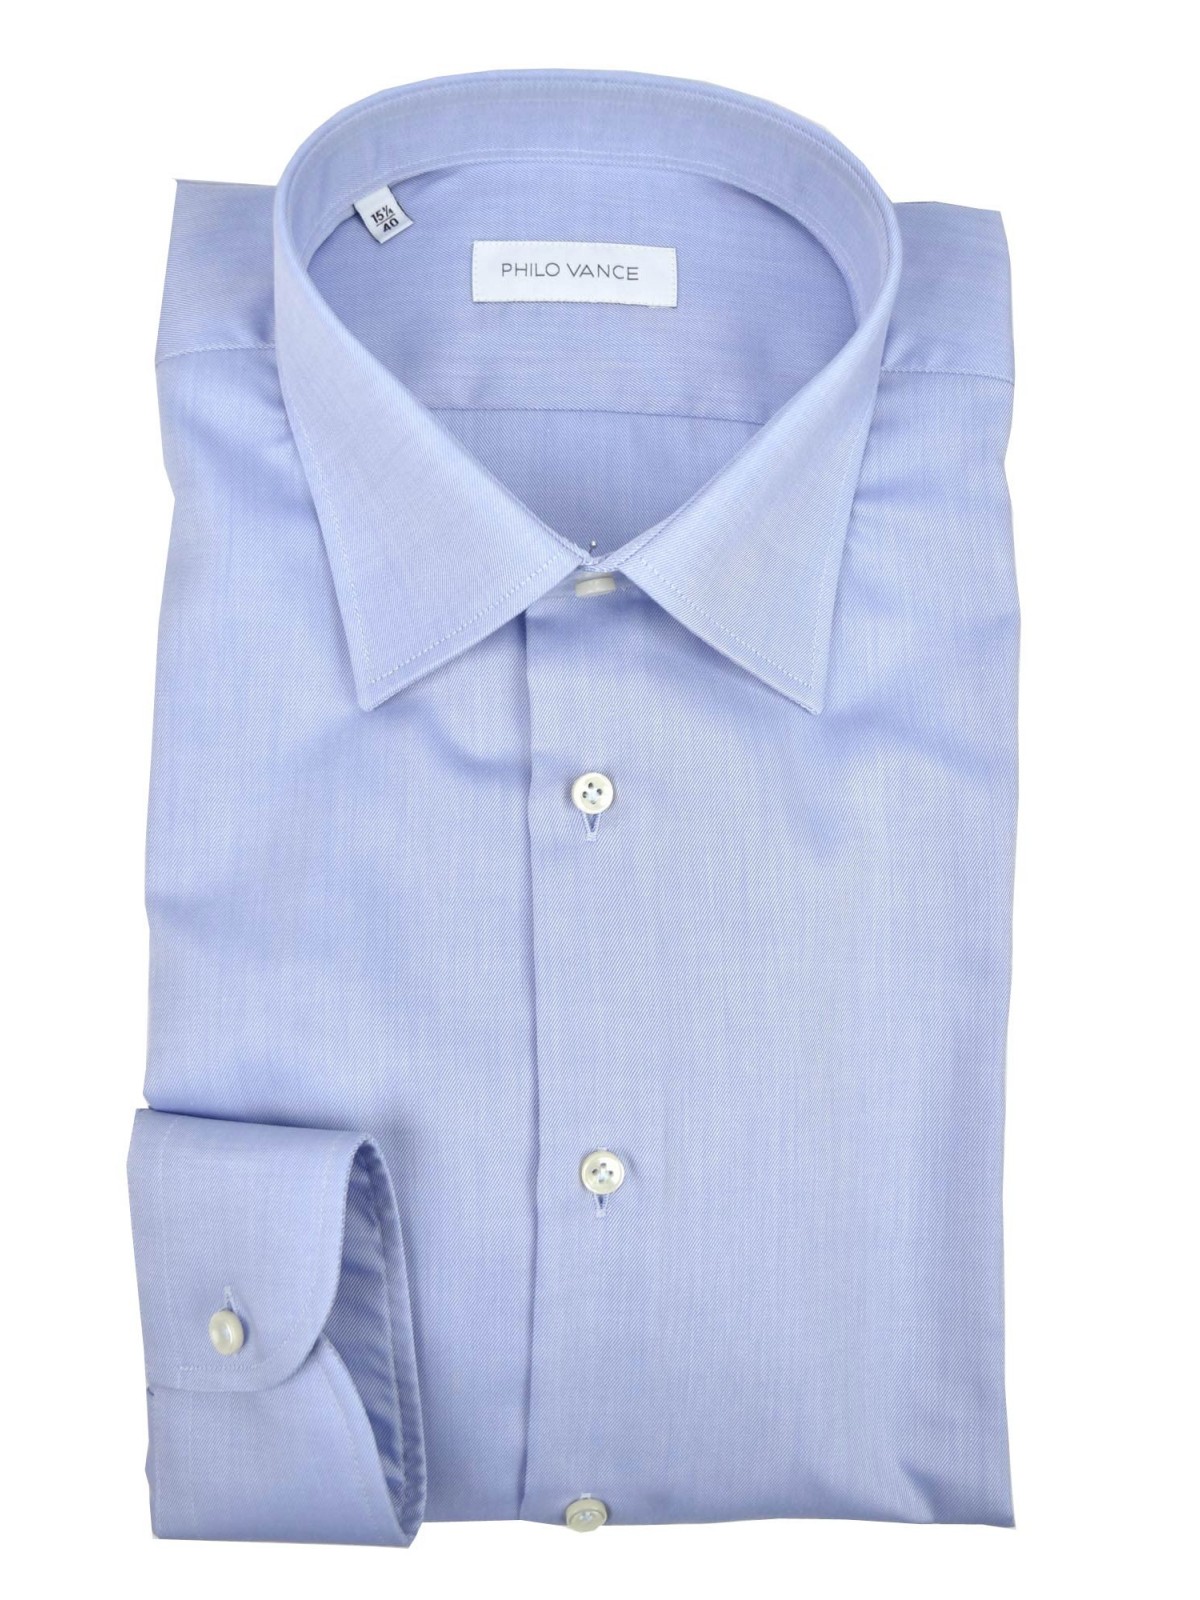 Camicia Uomo Azzurro Tessuto No Stiro Twill senza Taschino - Philo Vance - N10